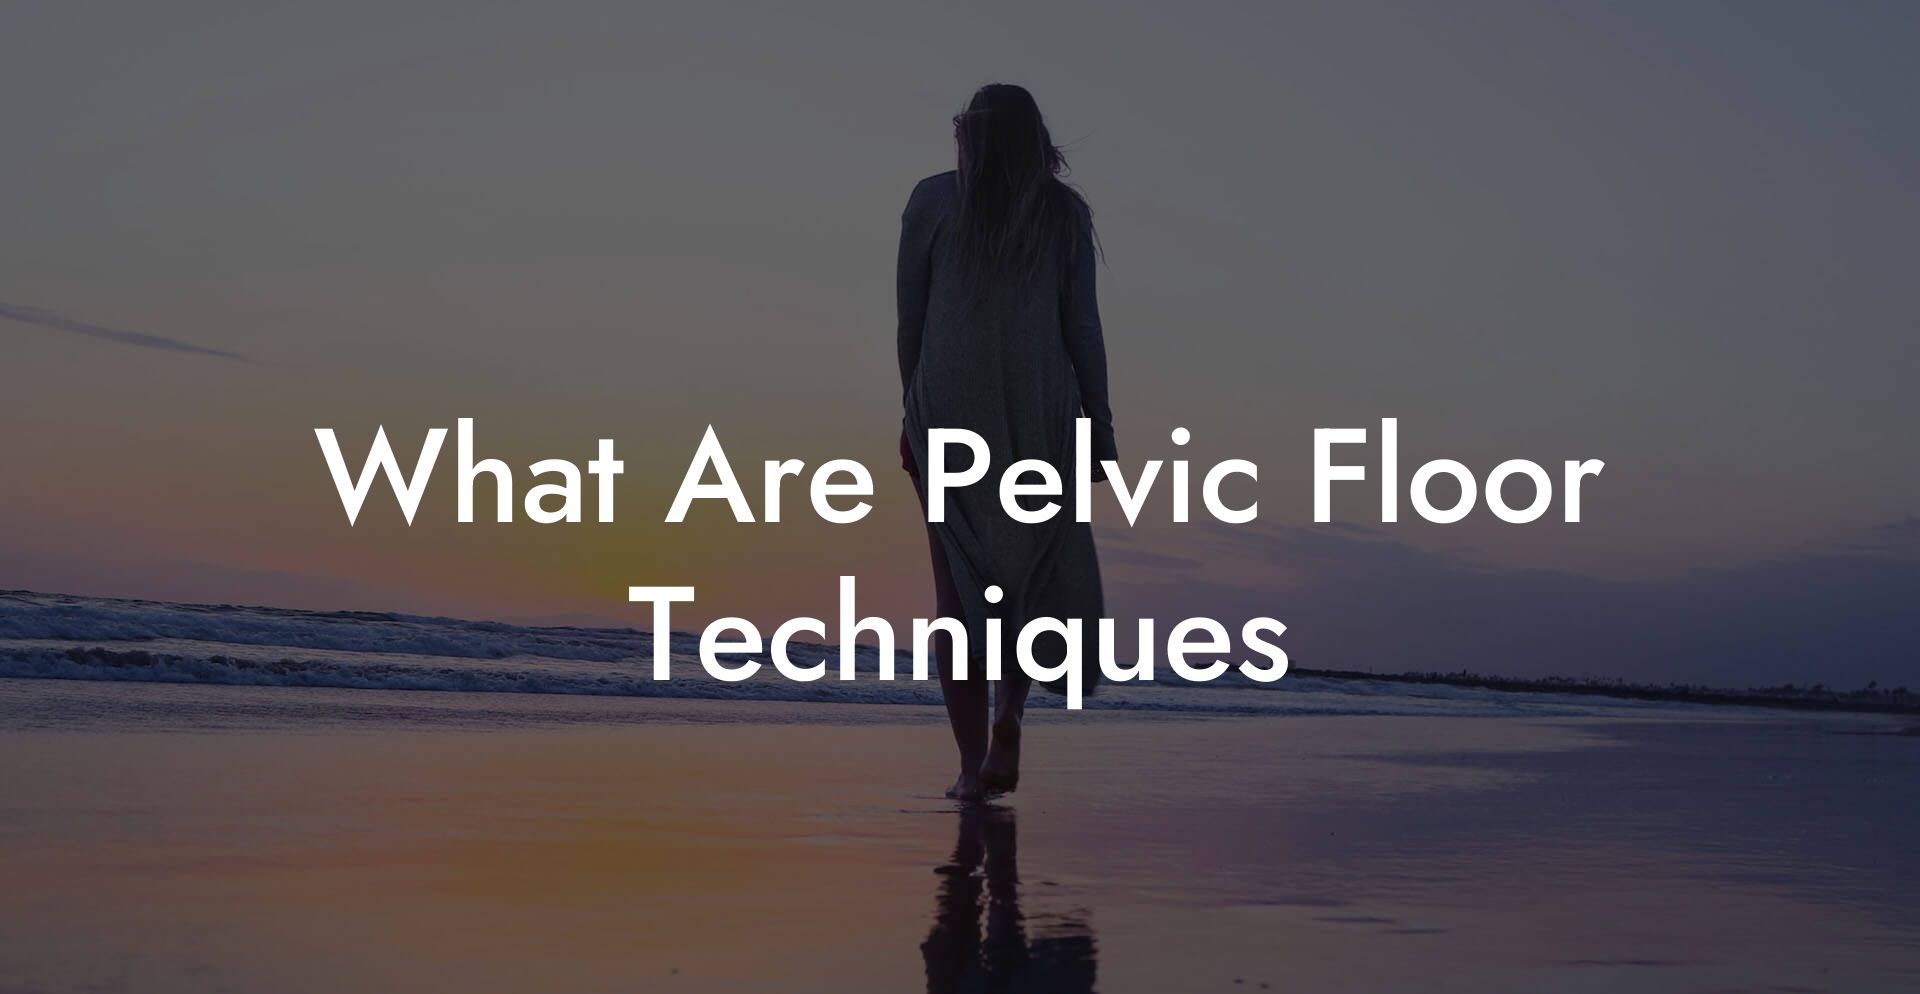 What Are Pelvic Floor Techniques